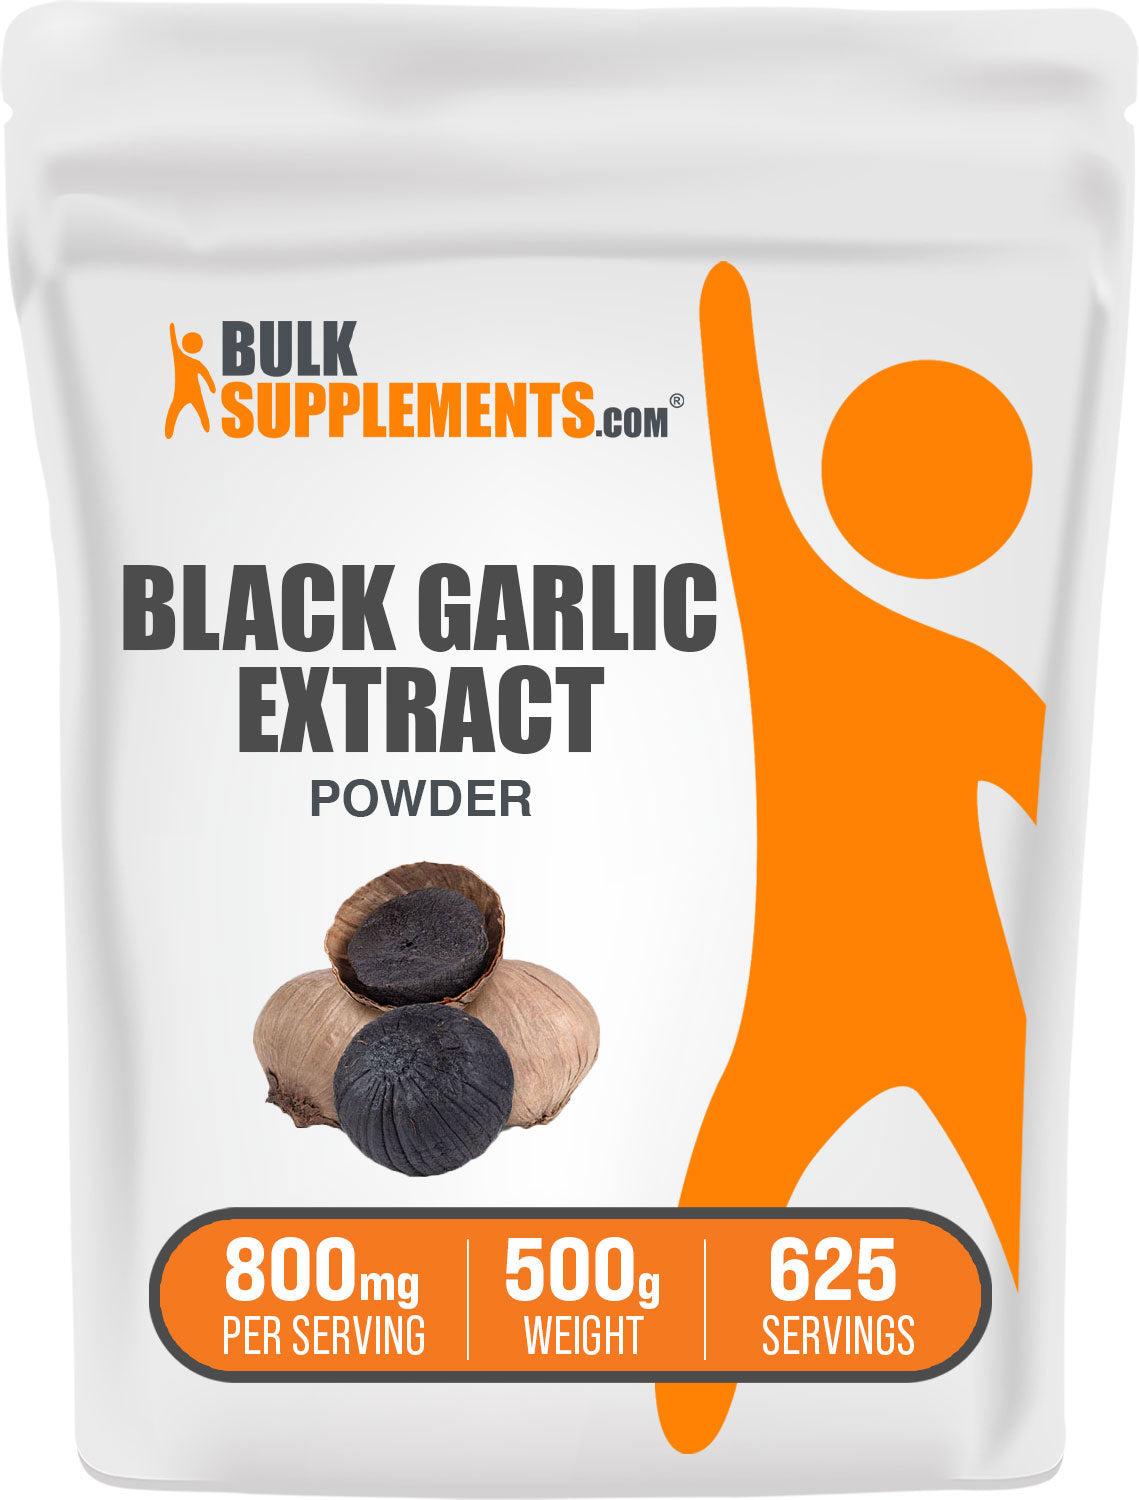 BulkSupplements.com Black garlic extract powder bag 500g